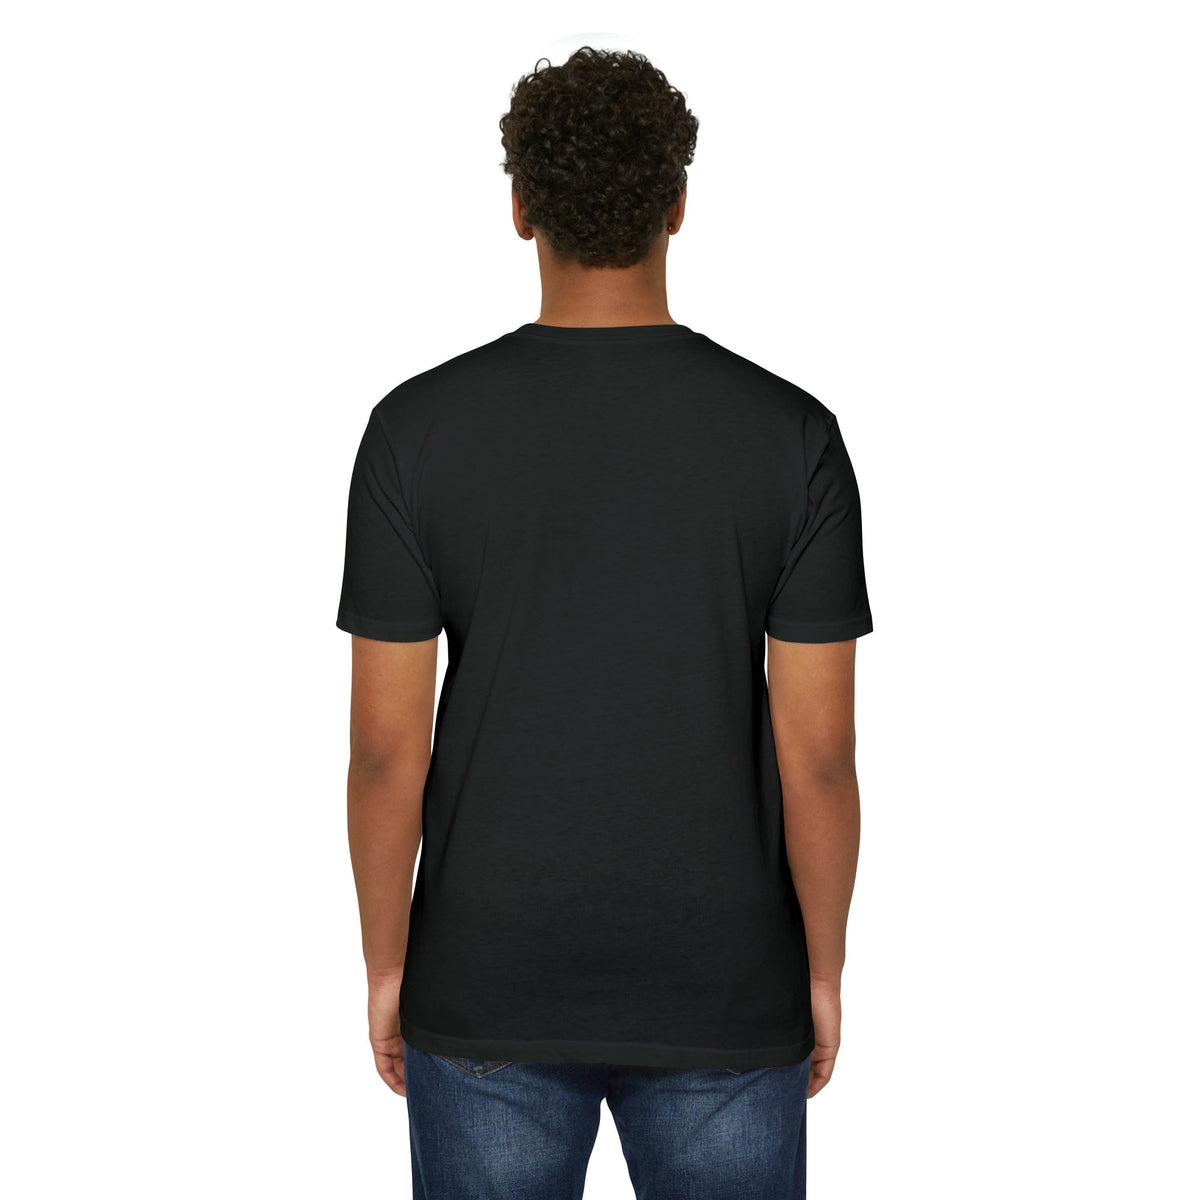 Hubby EST 2023 Unisex Jersey T-shirt